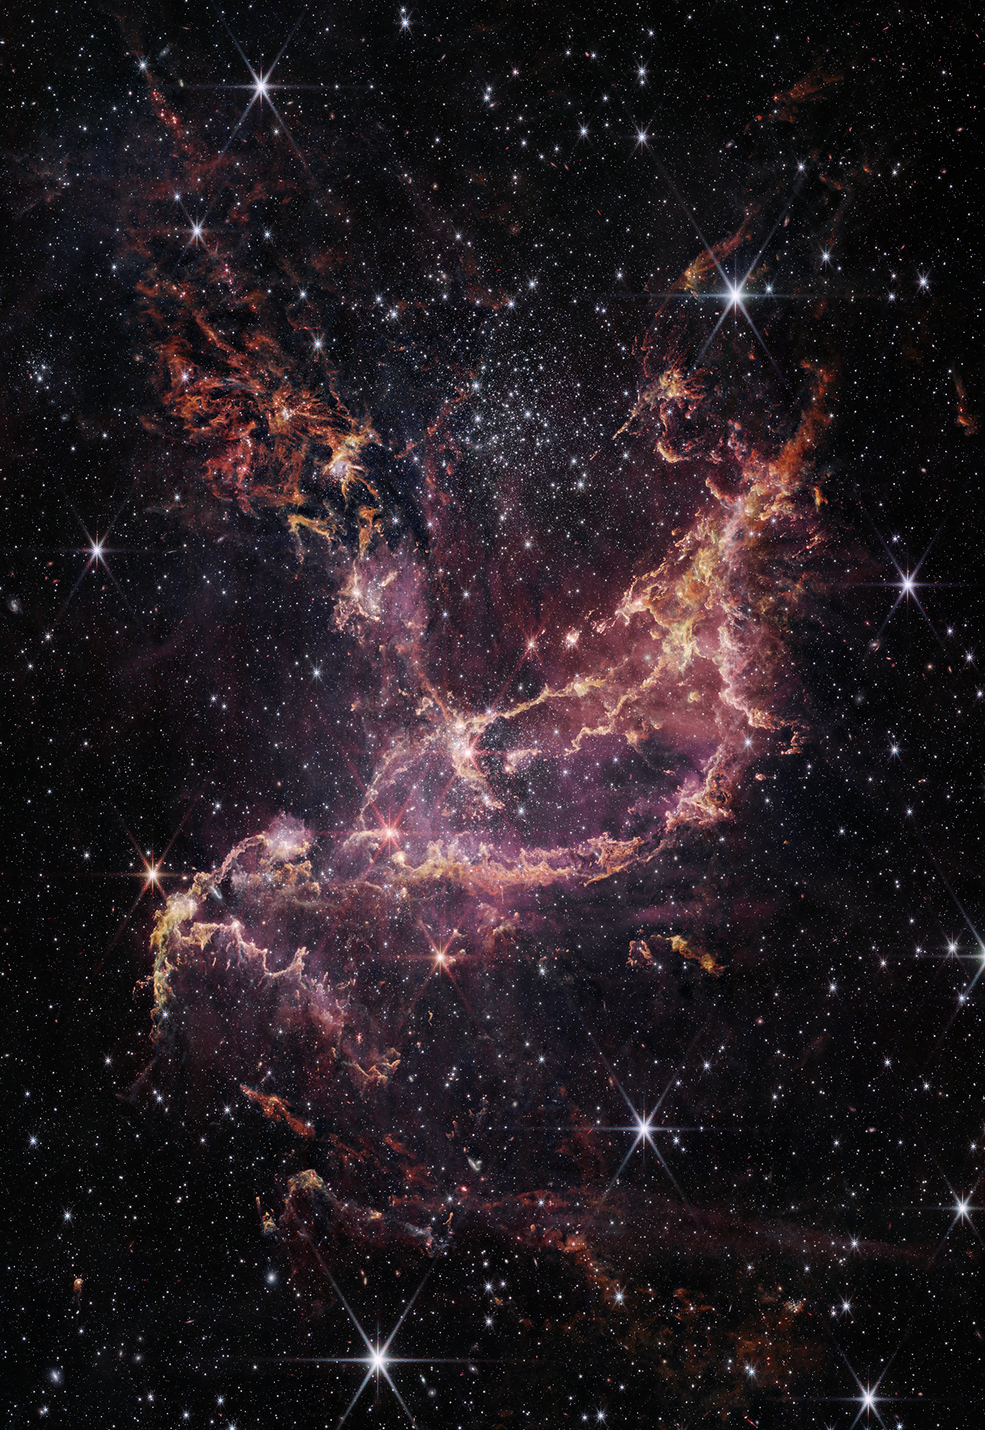 james webb space telescope, JWST, star formation, Small Magellanic Cloud, NGC 346